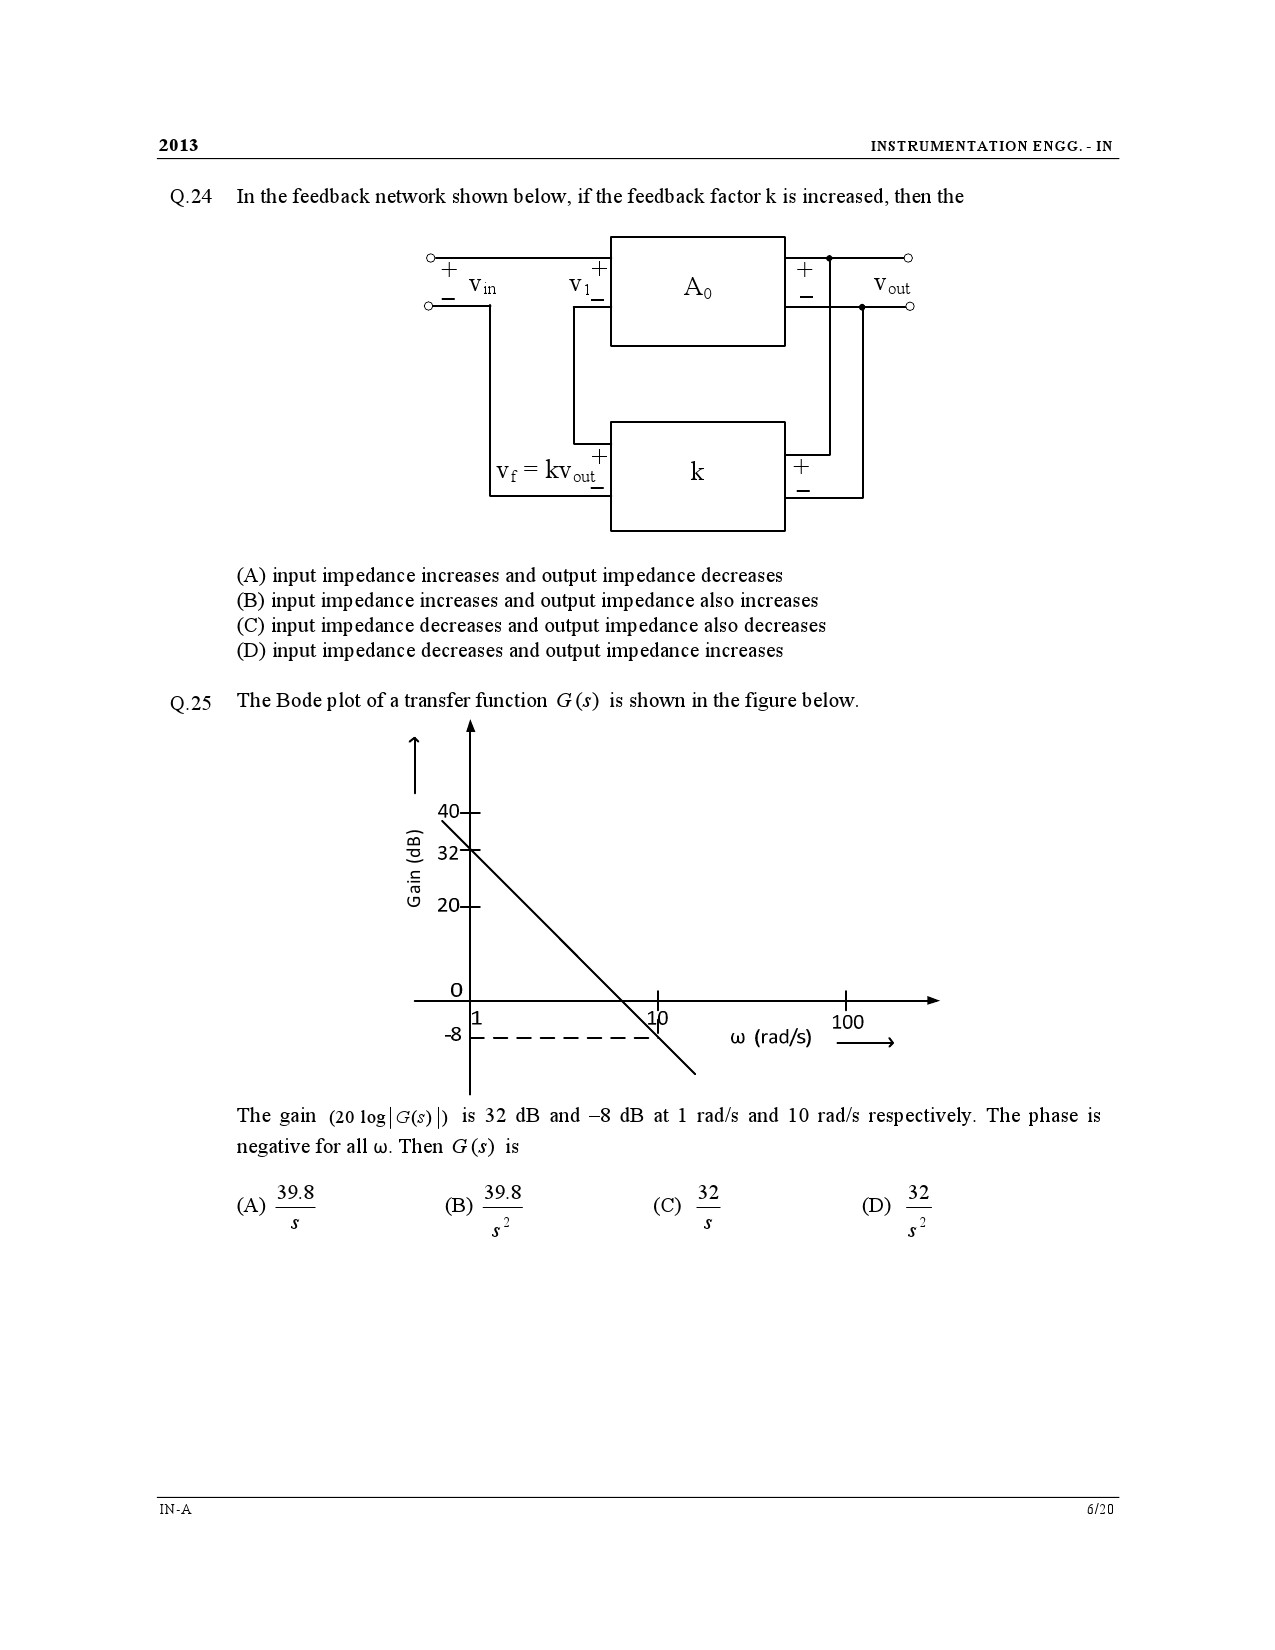 GATE Exam Question Paper 2013 Instrumentation Engineering 6